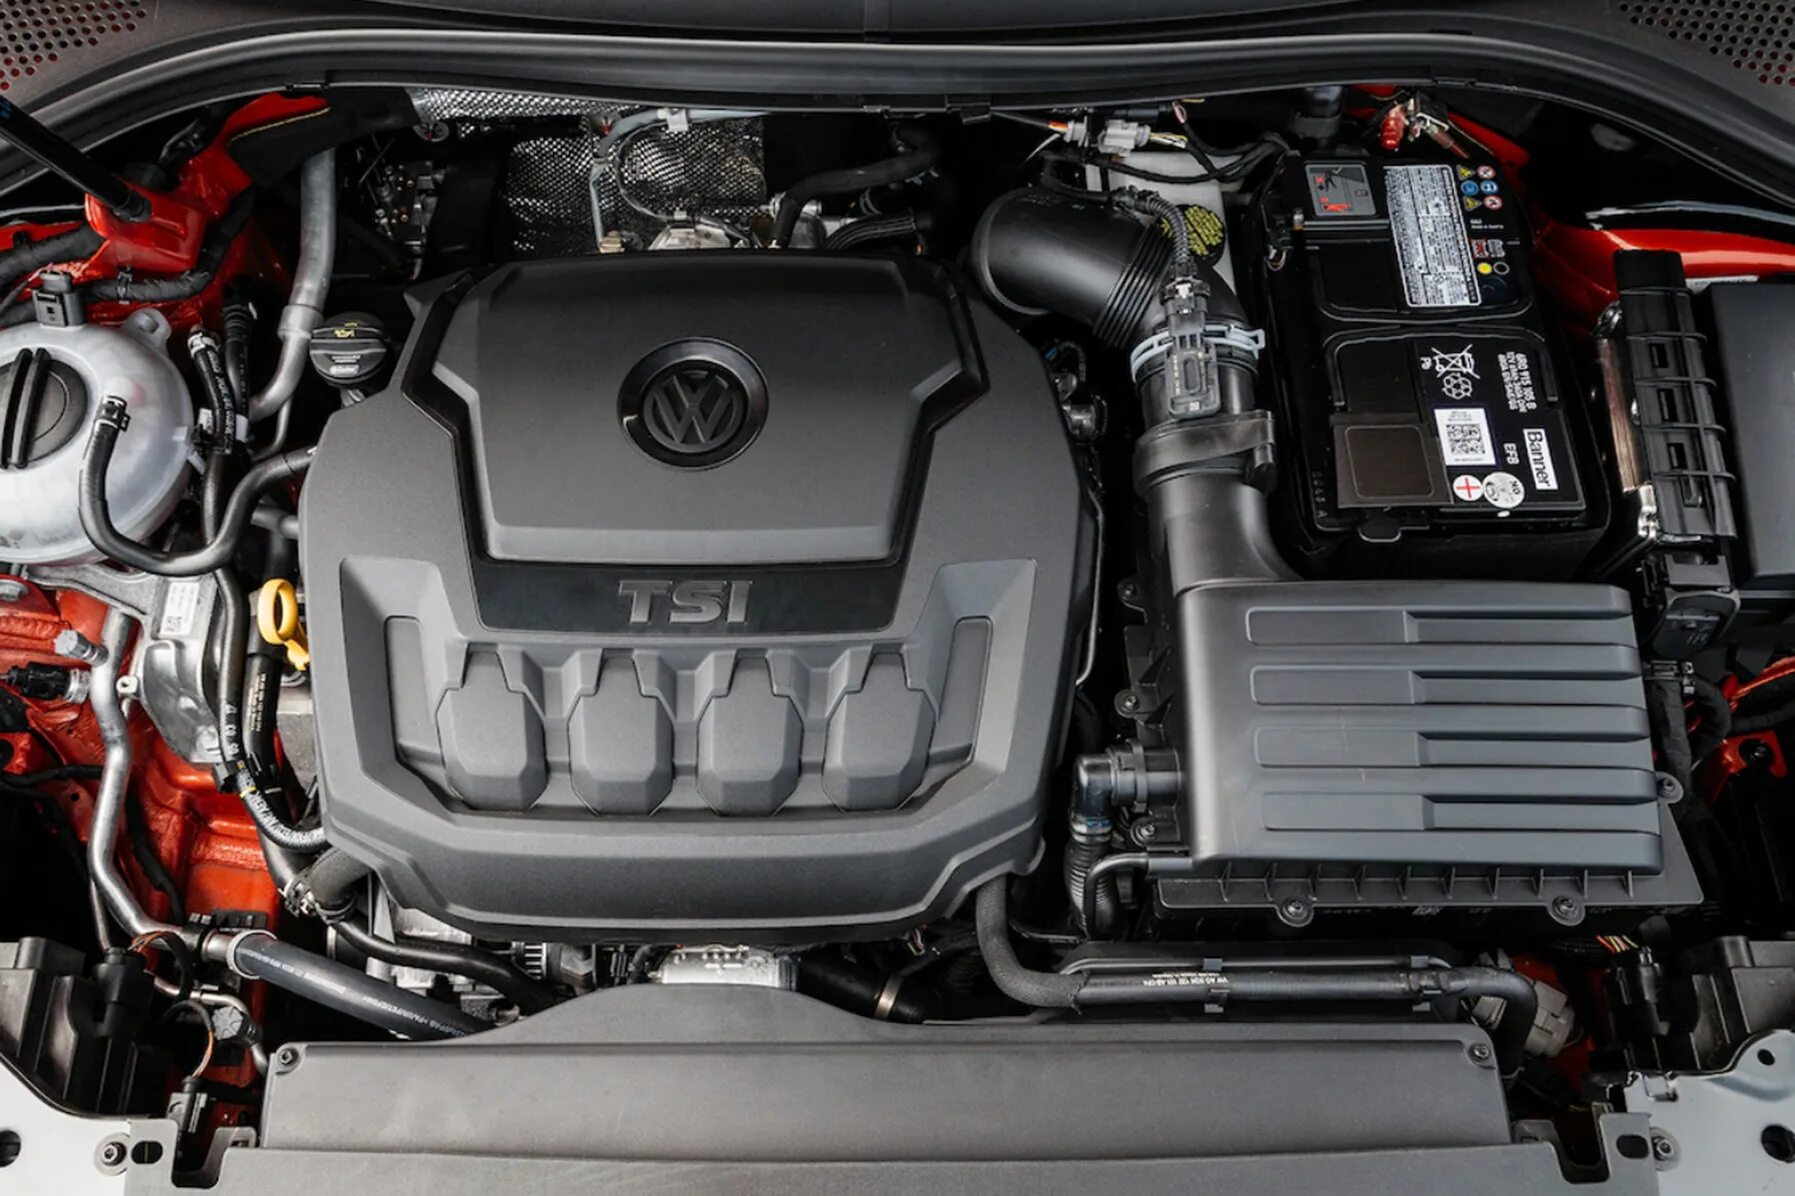 Двигатель Volkswagen Tiguan 2.0 TSI. Двигатель VW Tiguan TSI 2.0. Двигатель Volkswagen Tiguan 1.4 TSI. Фольксваген Тигуан 2.0 TSI 220 Л.С мотор. 150 лс 2 2